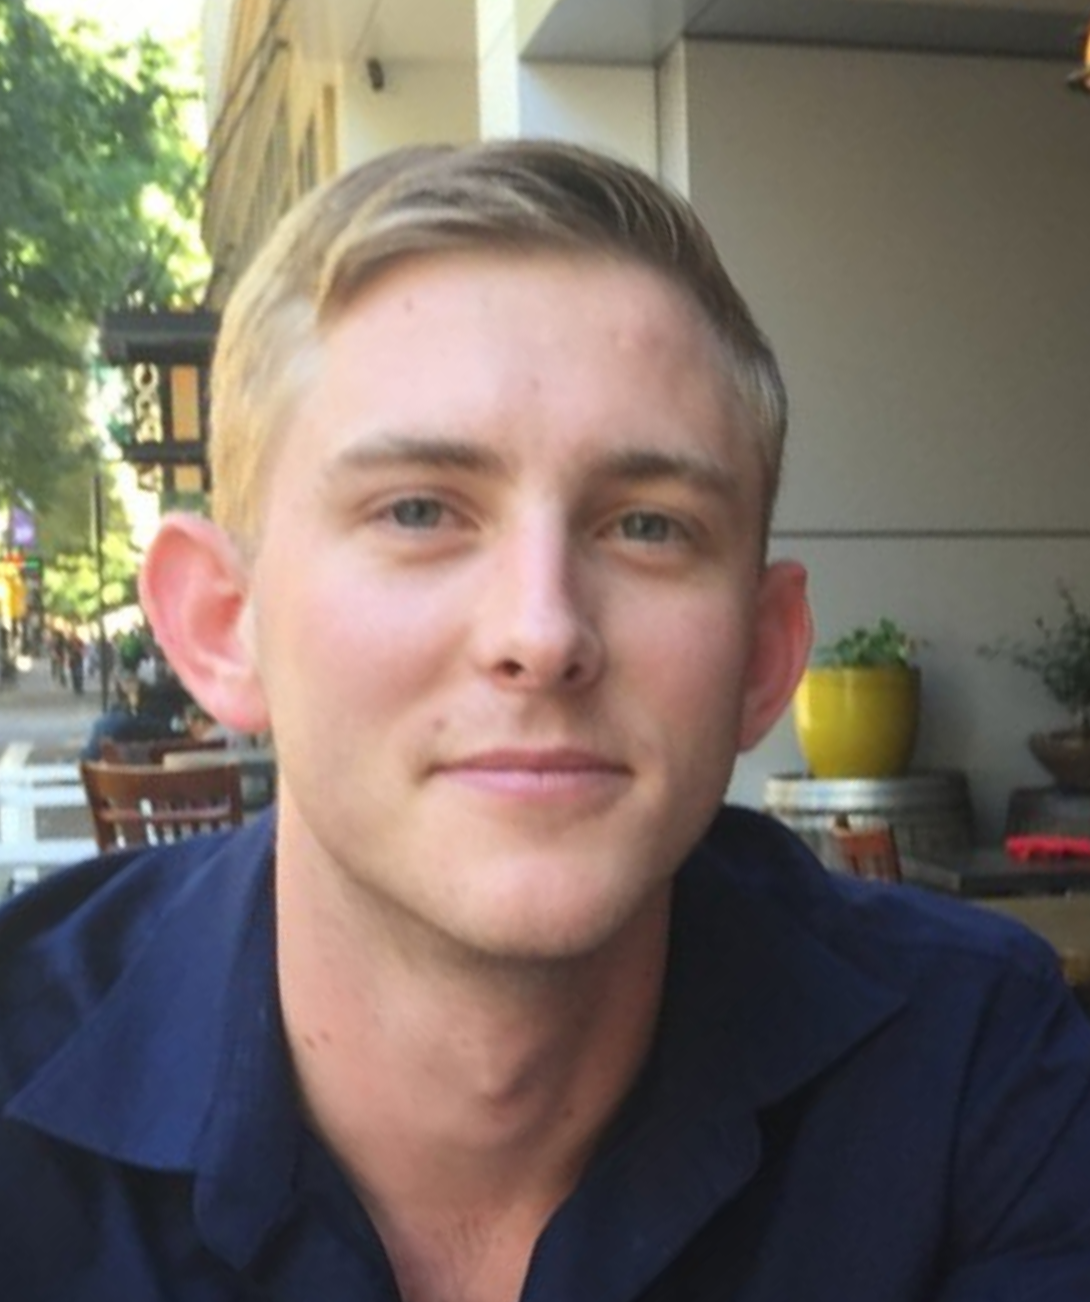 A Profile in Courage: COVID-19 ‘Strike Team’ Member Blake Andersen, EMT